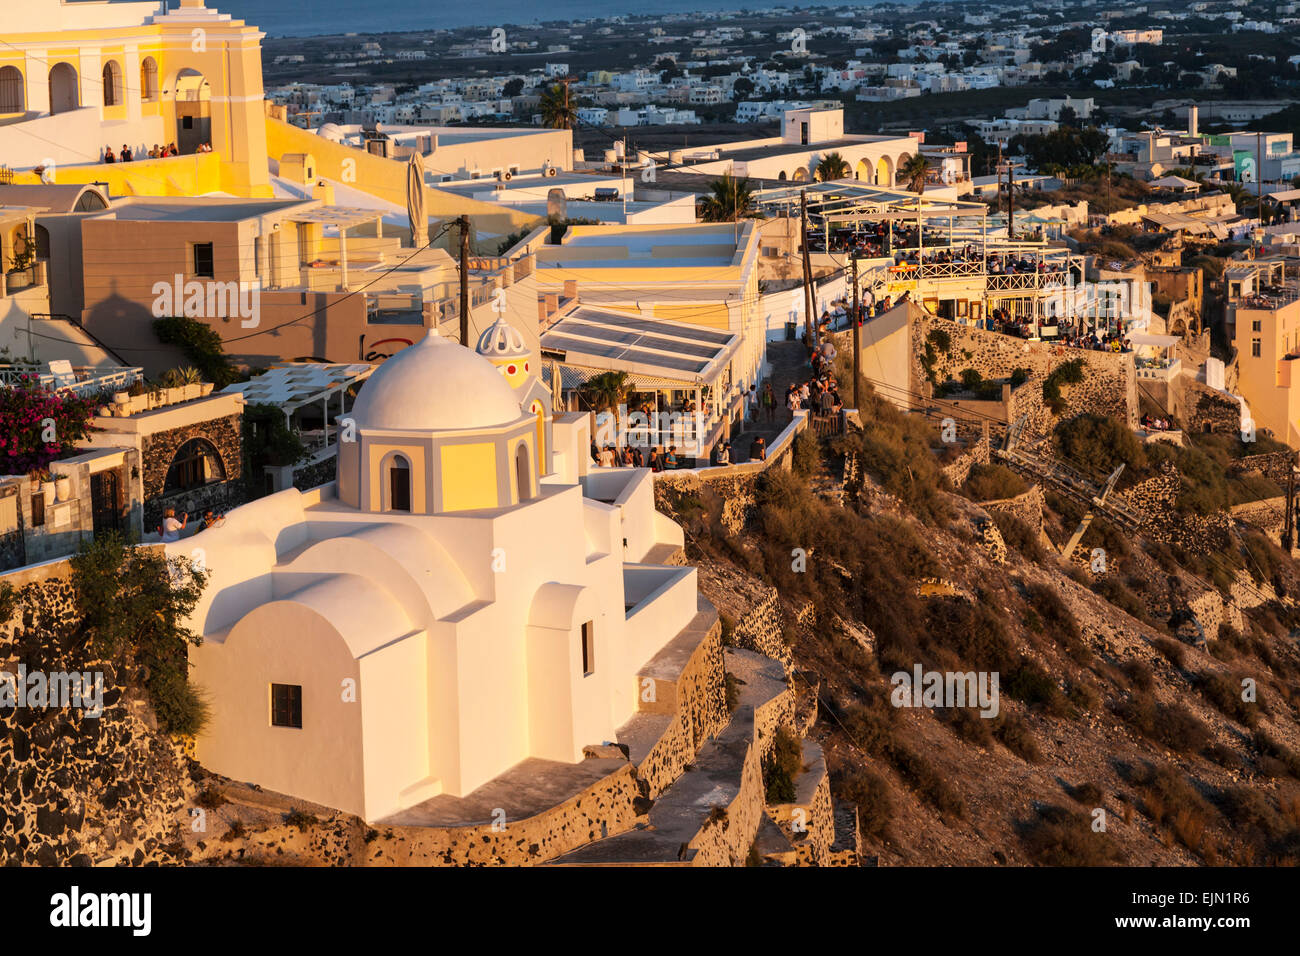 Am Abend kleine griechisch-orthodoxe Kirche erschossen bei Sonnenuntergang, Fira, Santorini (Thira) Griechenland. Stockfoto